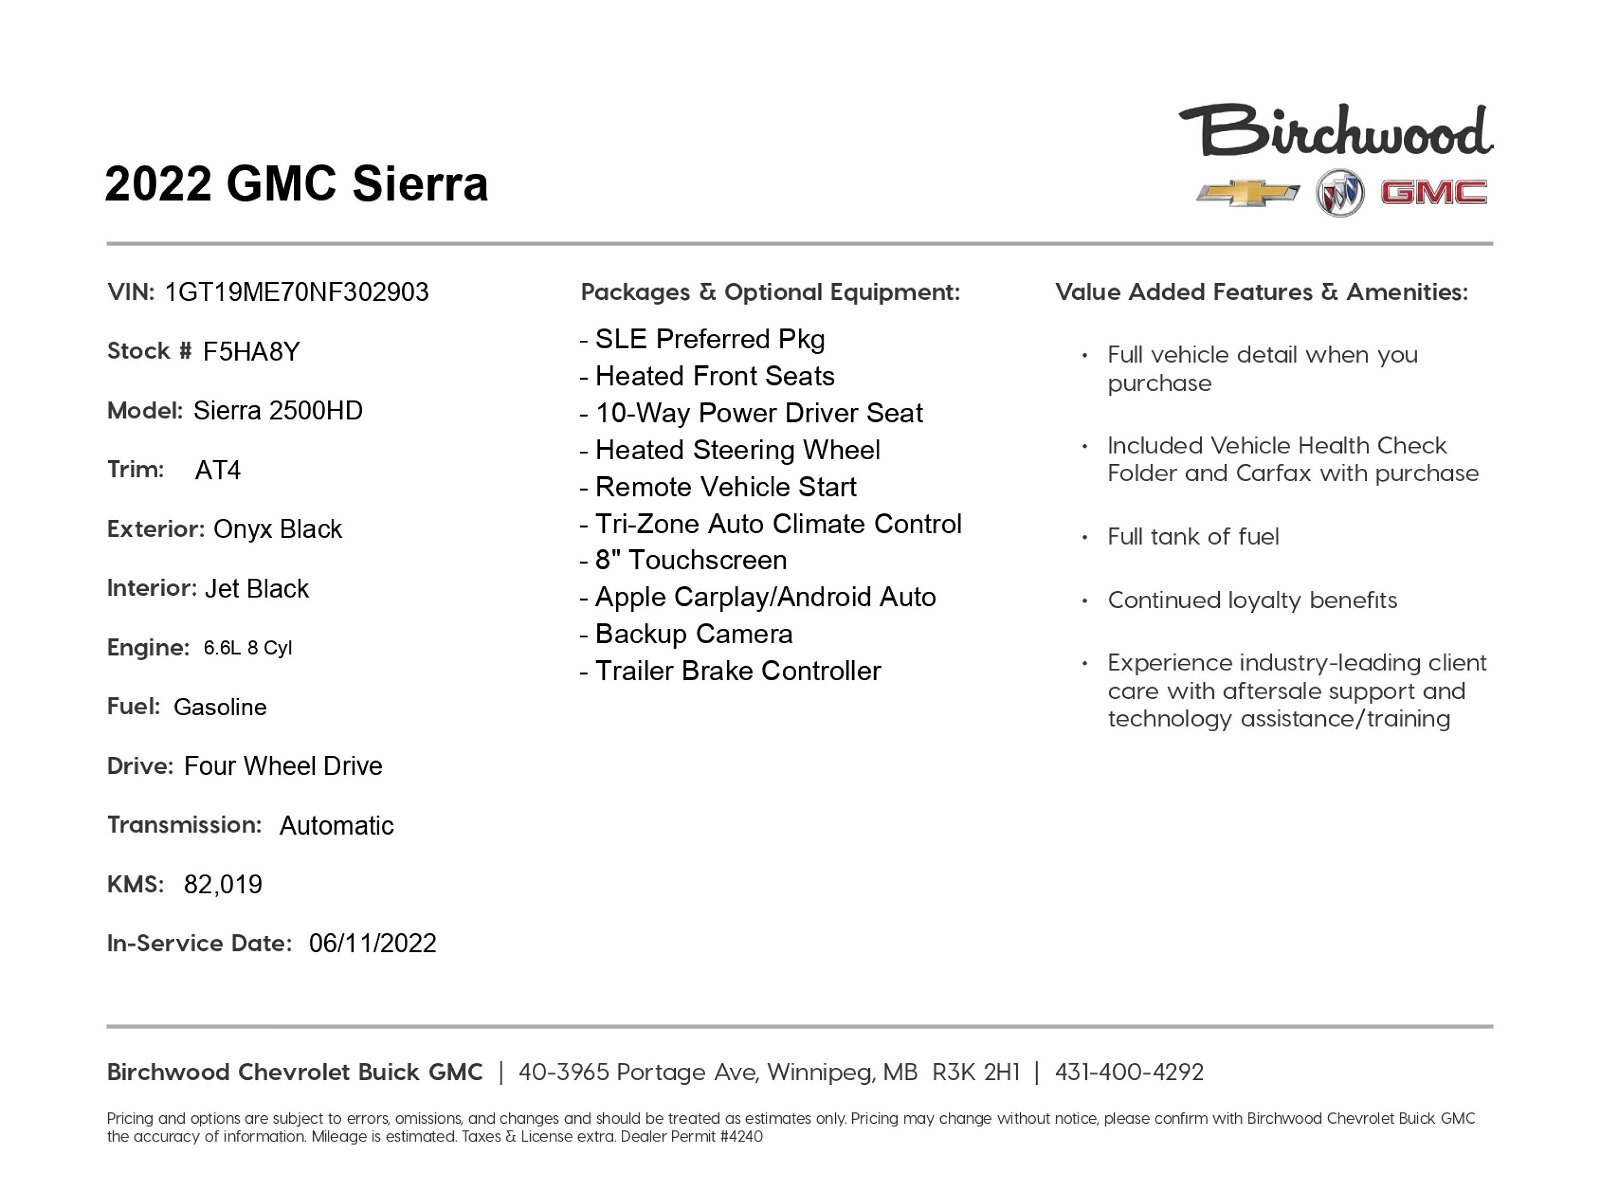 2022 GMC SIERRA 2500HD SLE 2-year Maintenance Free!